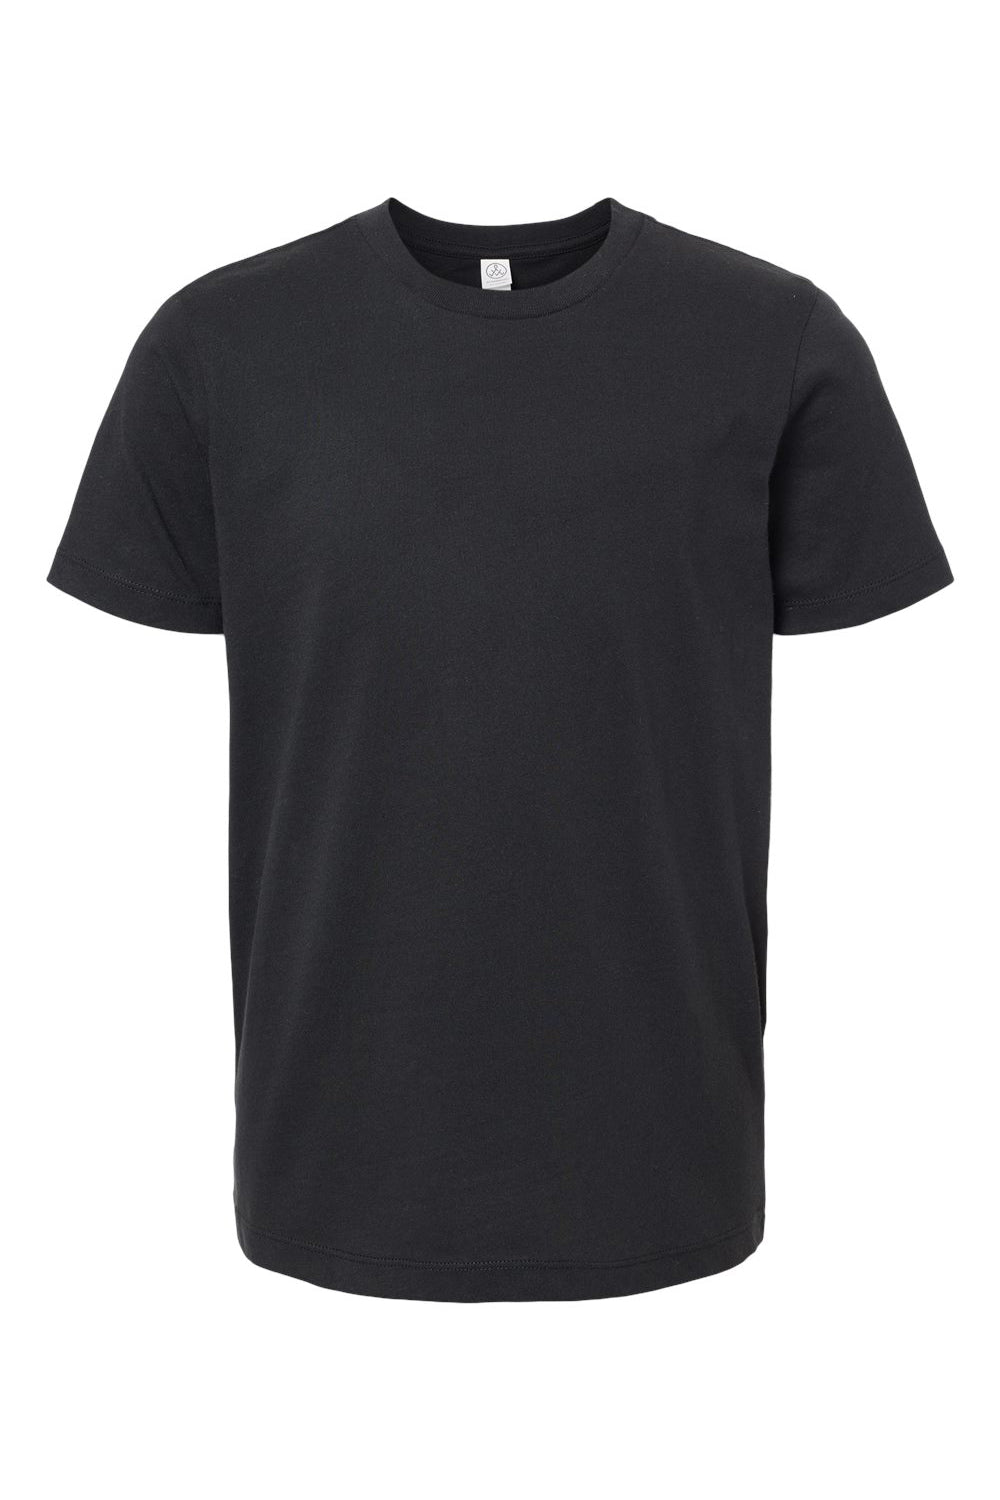 Alternative K1070 Youth Go To Short Sleeve Crewneck T-Shirt Black Flat Front